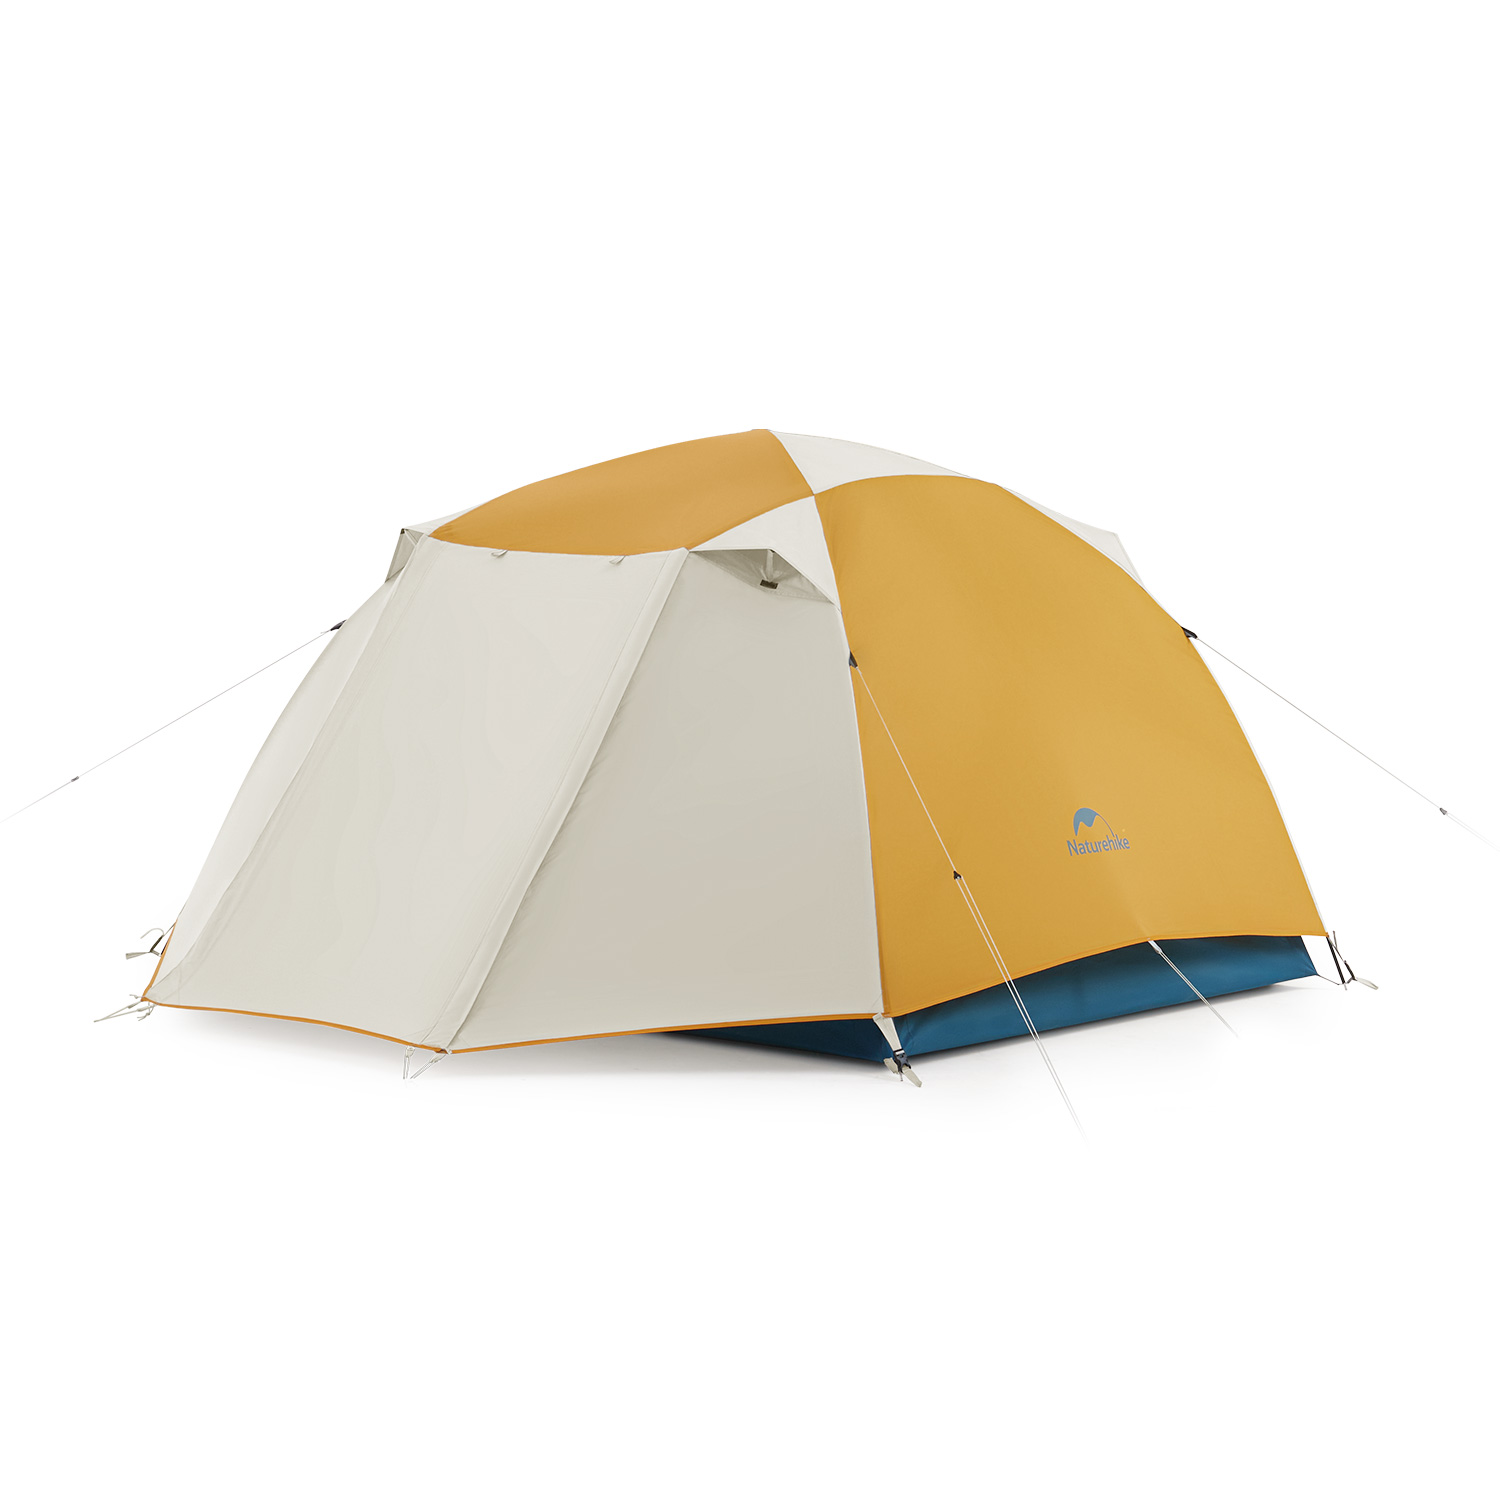 Naturehike Cloud River テント 2人用 3人用 軽量 ソロキャンプ 登山 自立式 前室付きダブルウォール アウトドア